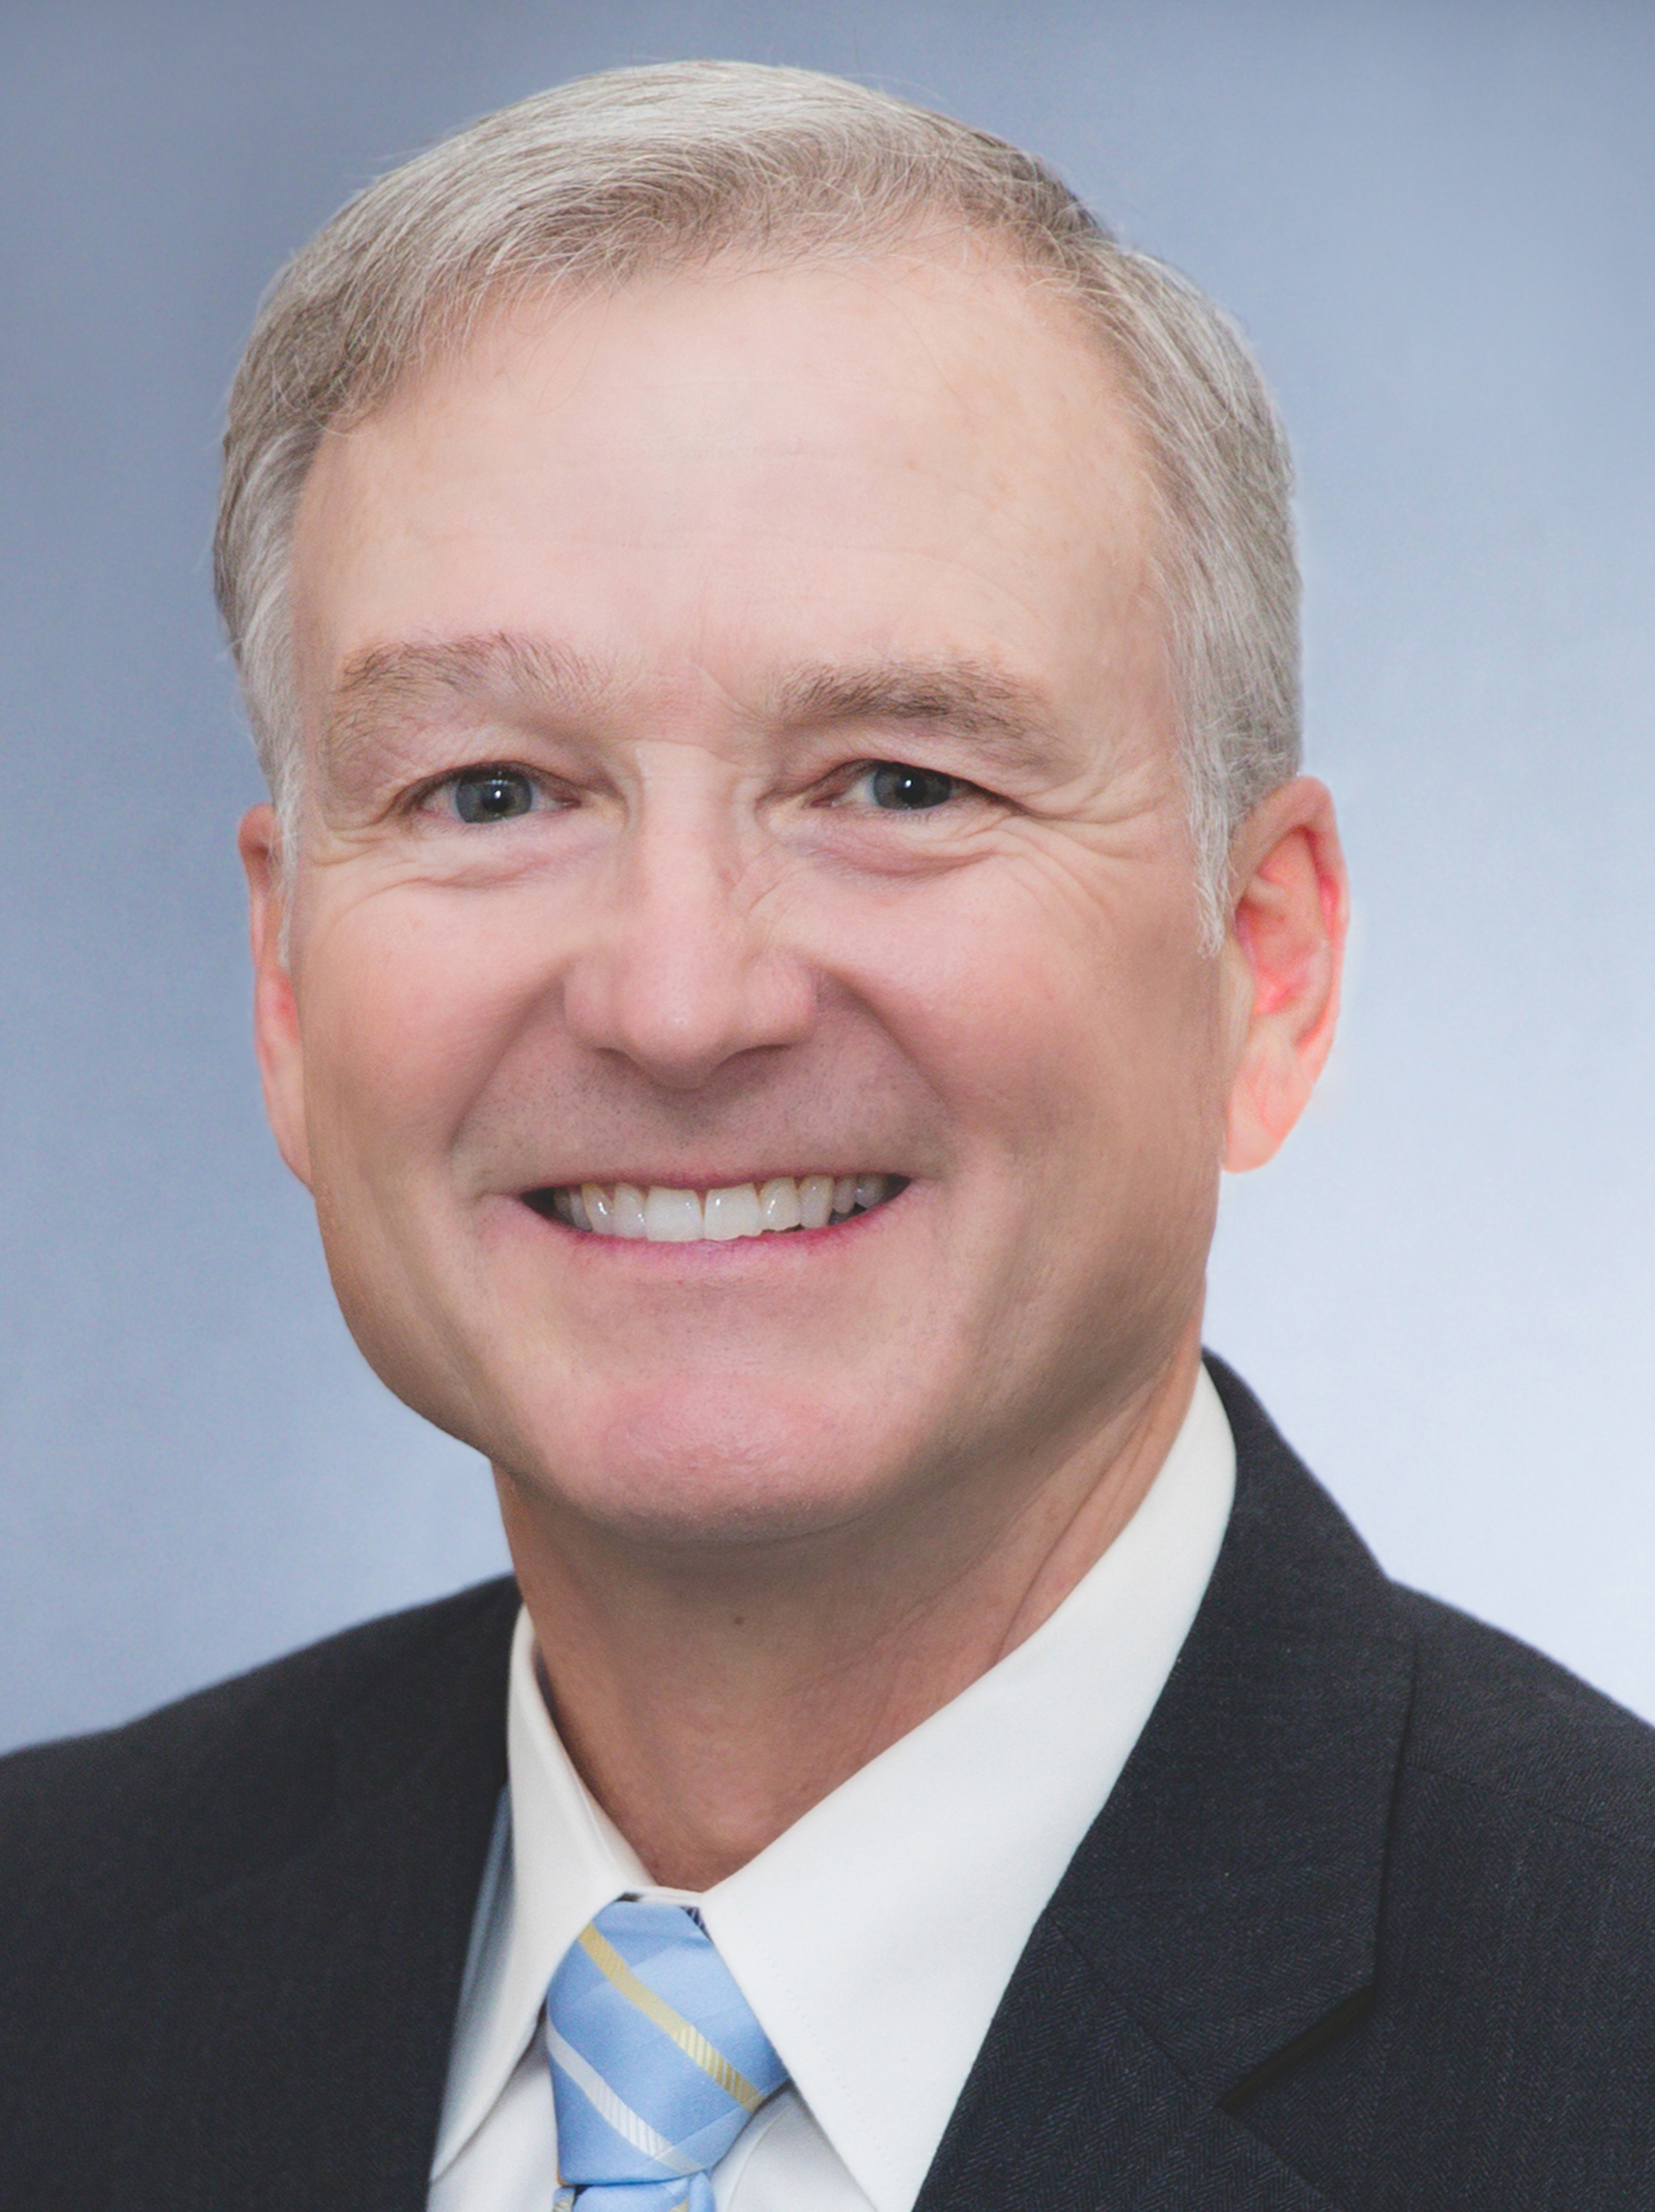  senator Chris Erwin